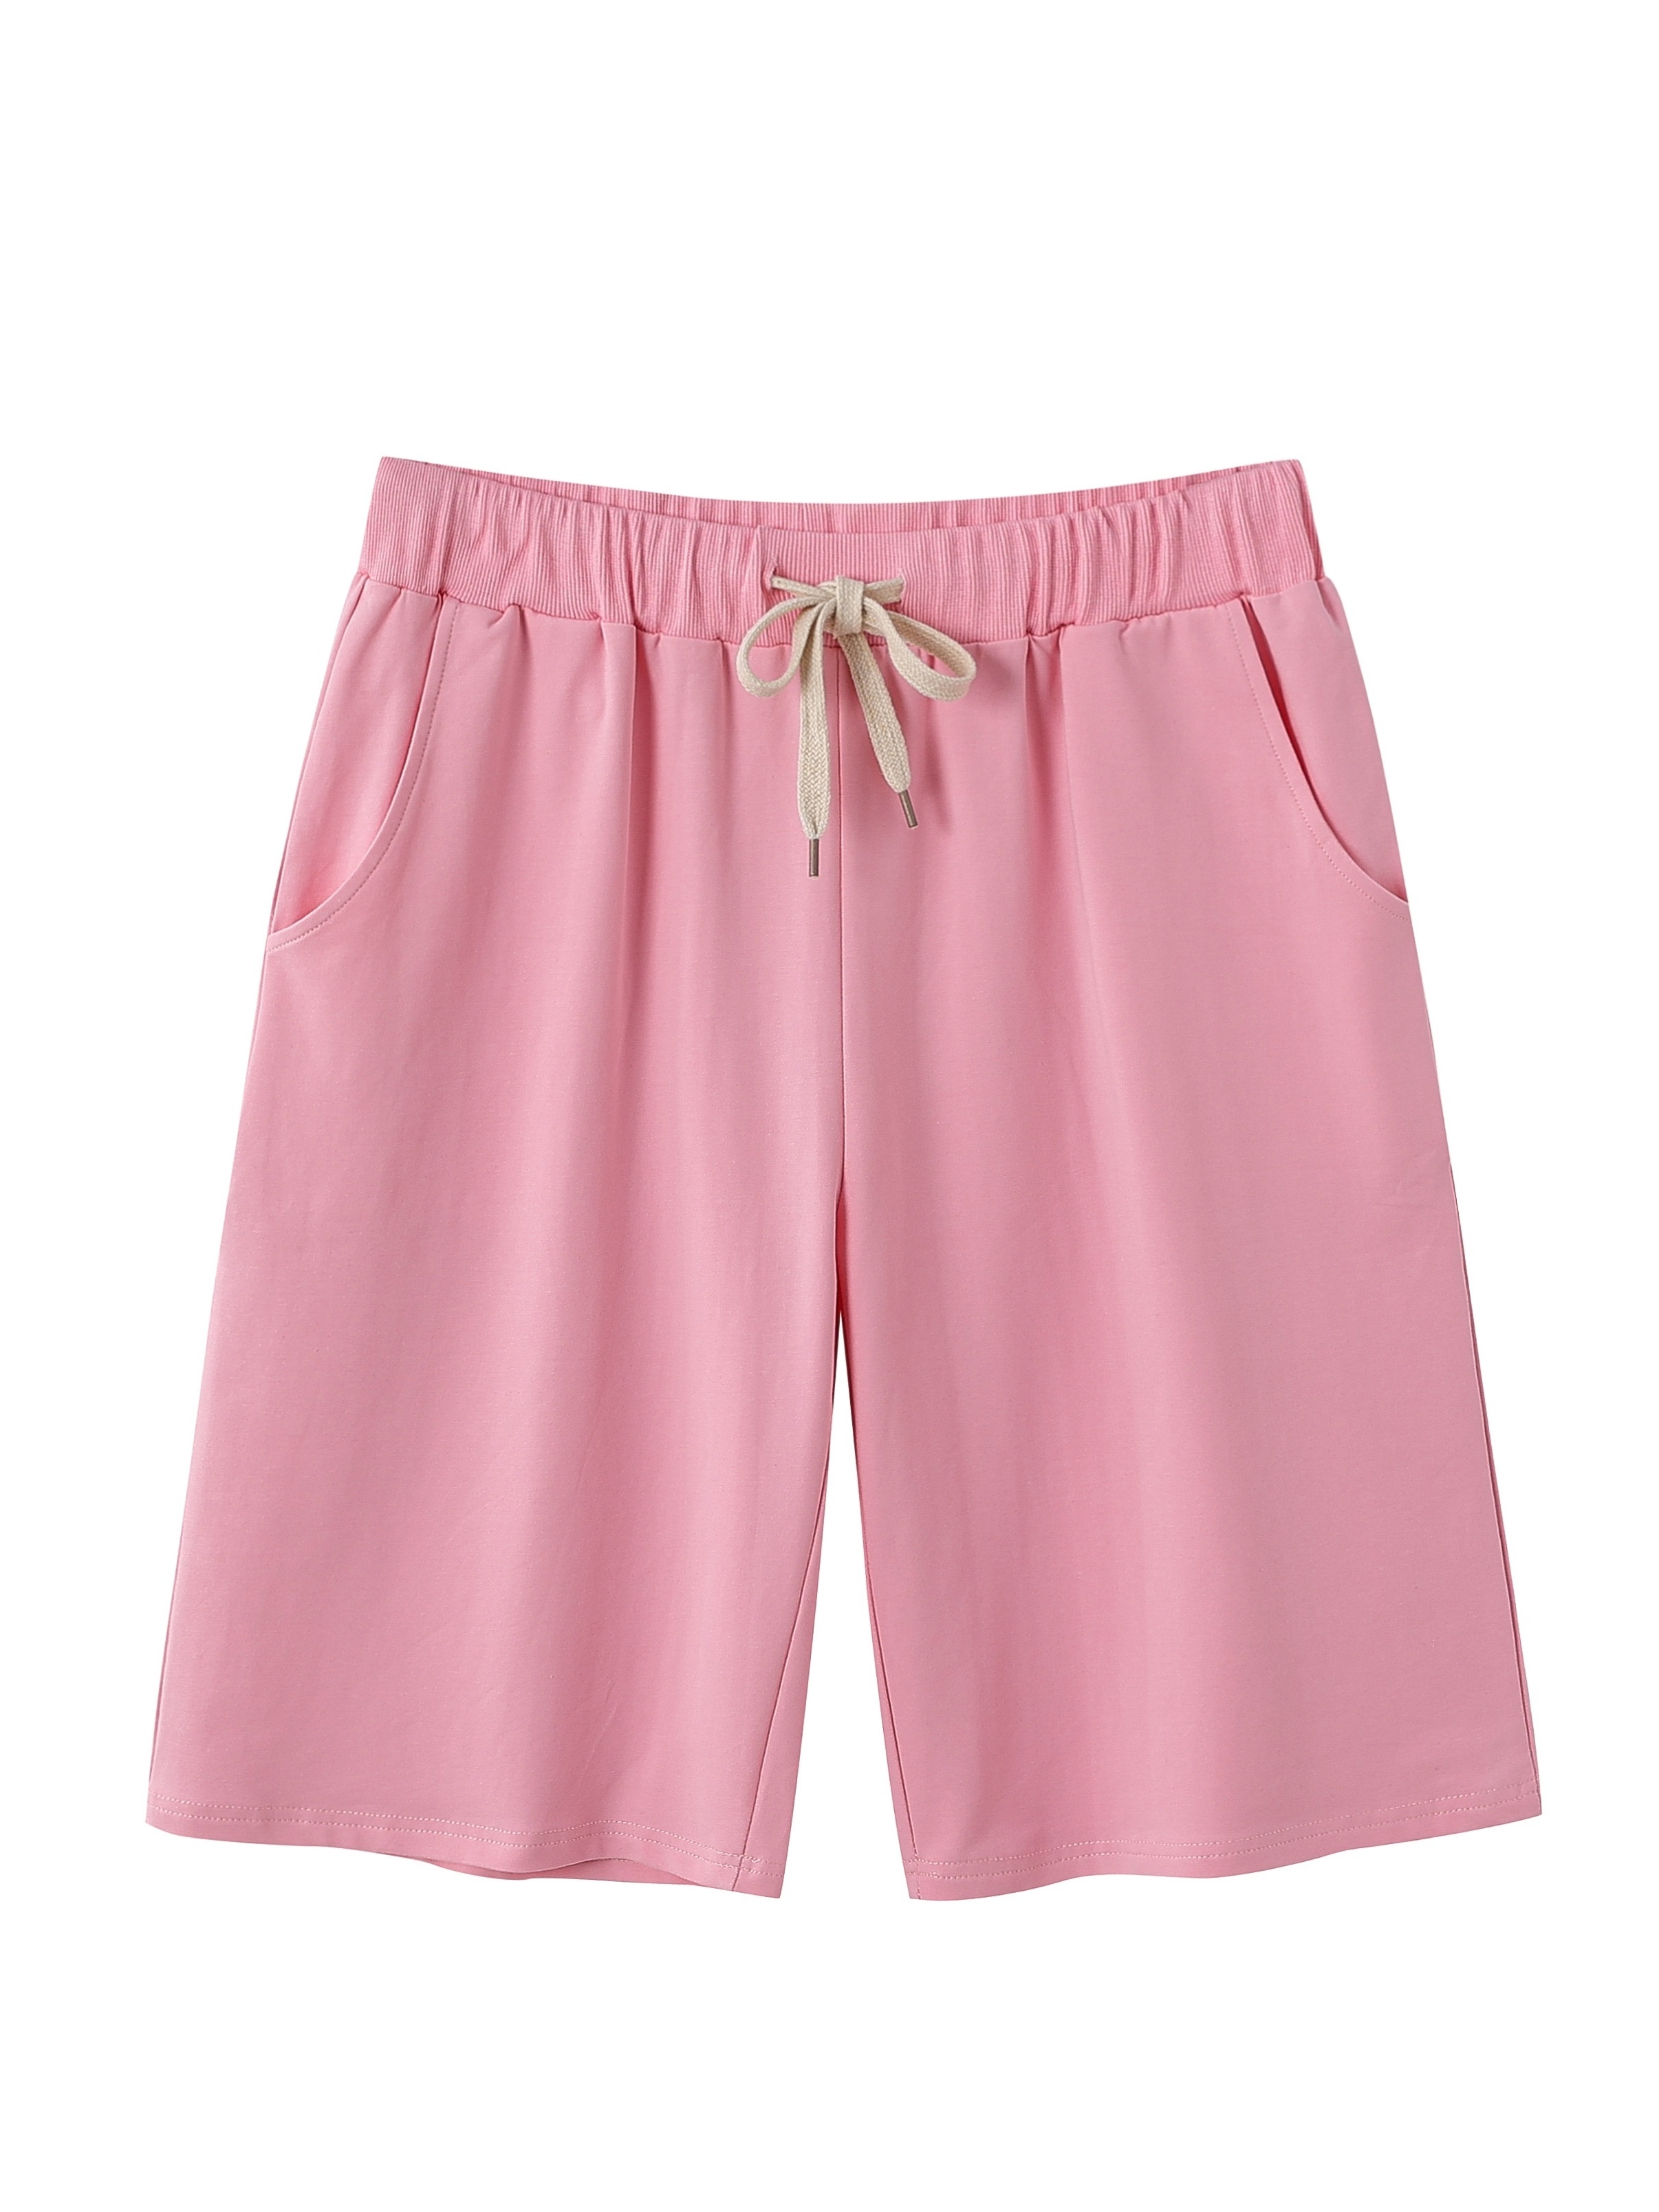 Sports Fashion Stretch Yoga Shorts Elastic Hot Summer Pants Shorts Women  Sexy Pants (Pink, XL)